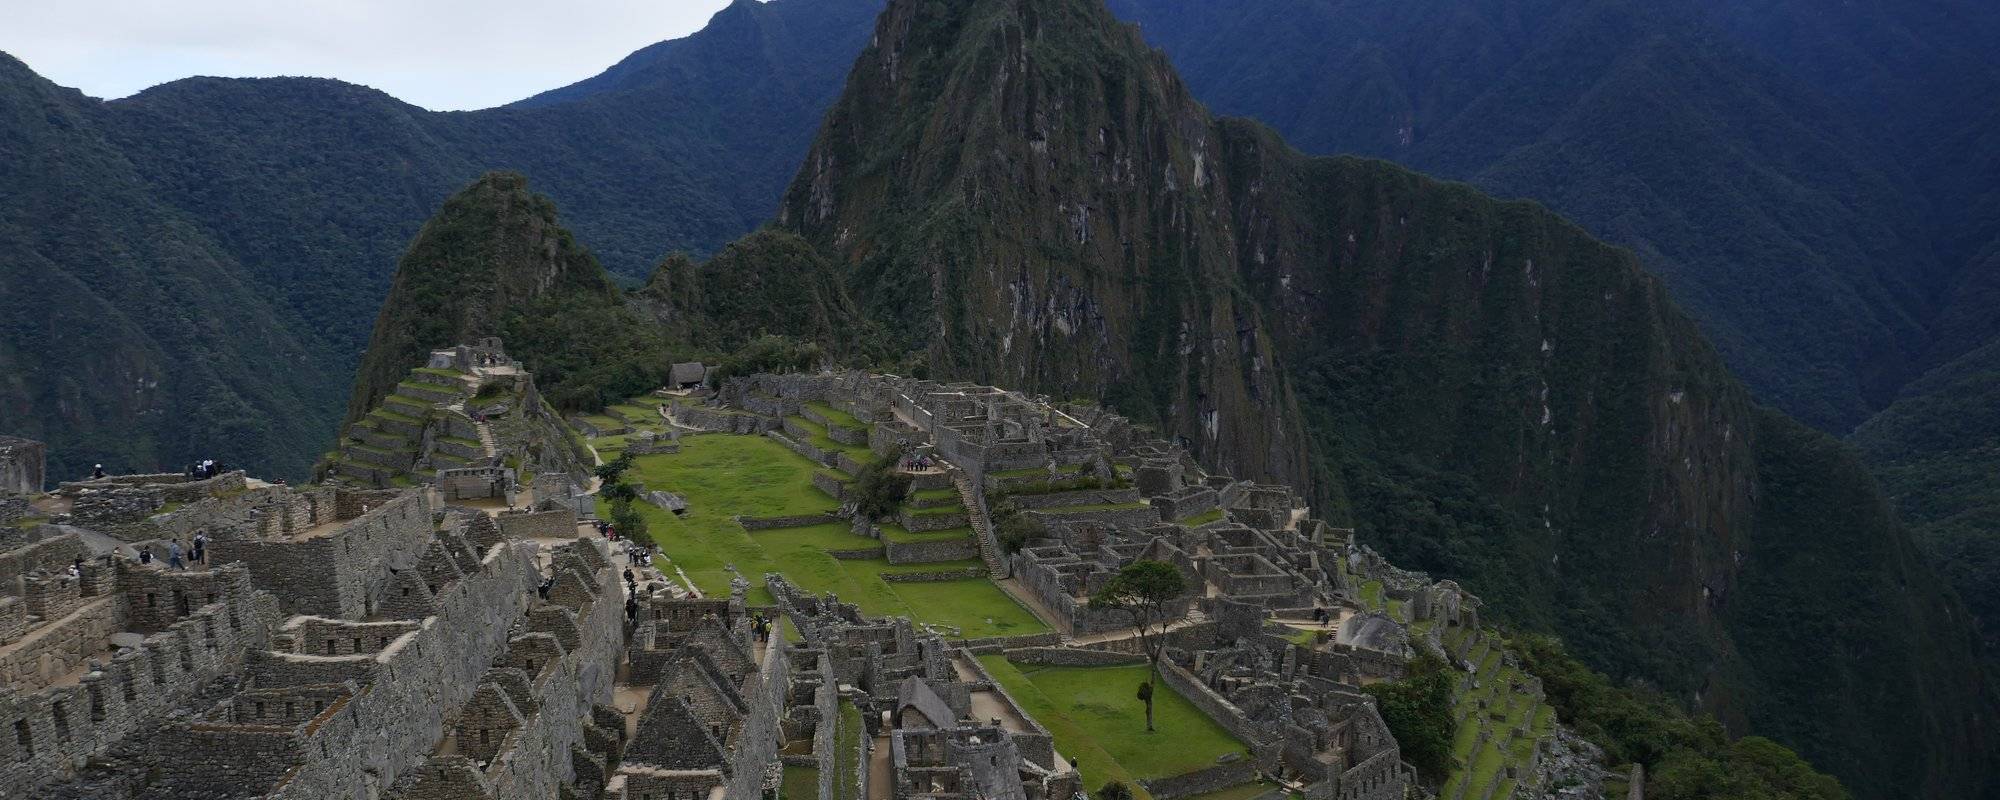 Salkantay Trek - In 5 days and 75km to Machu Picchu